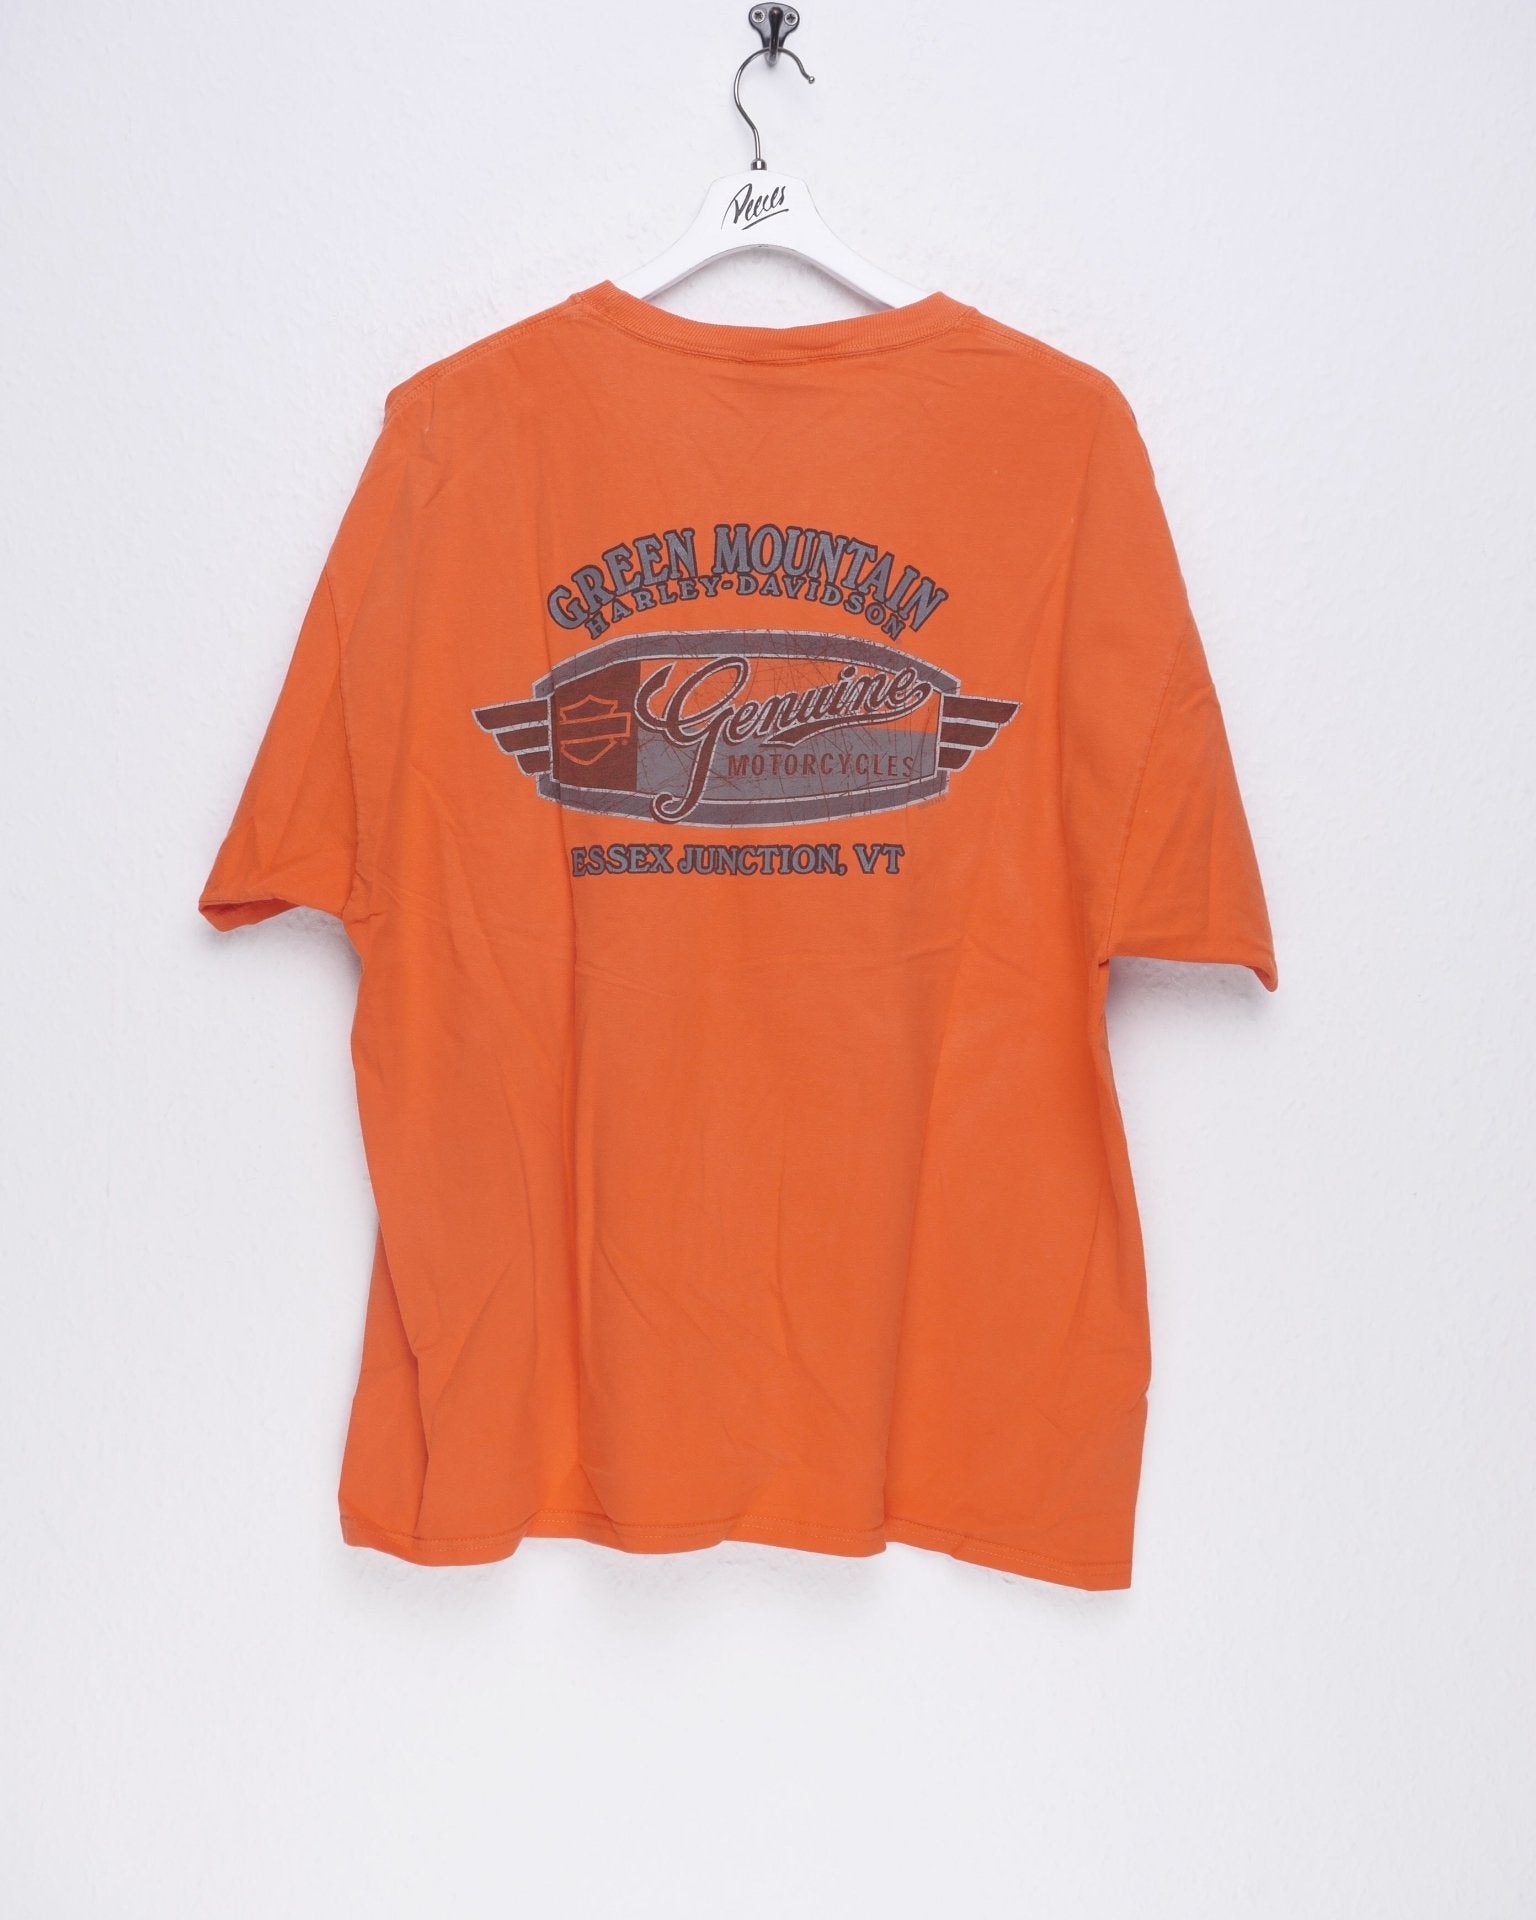 Harley Davidson printed Green Mountain Graphic Vintage Shirt - Peeces